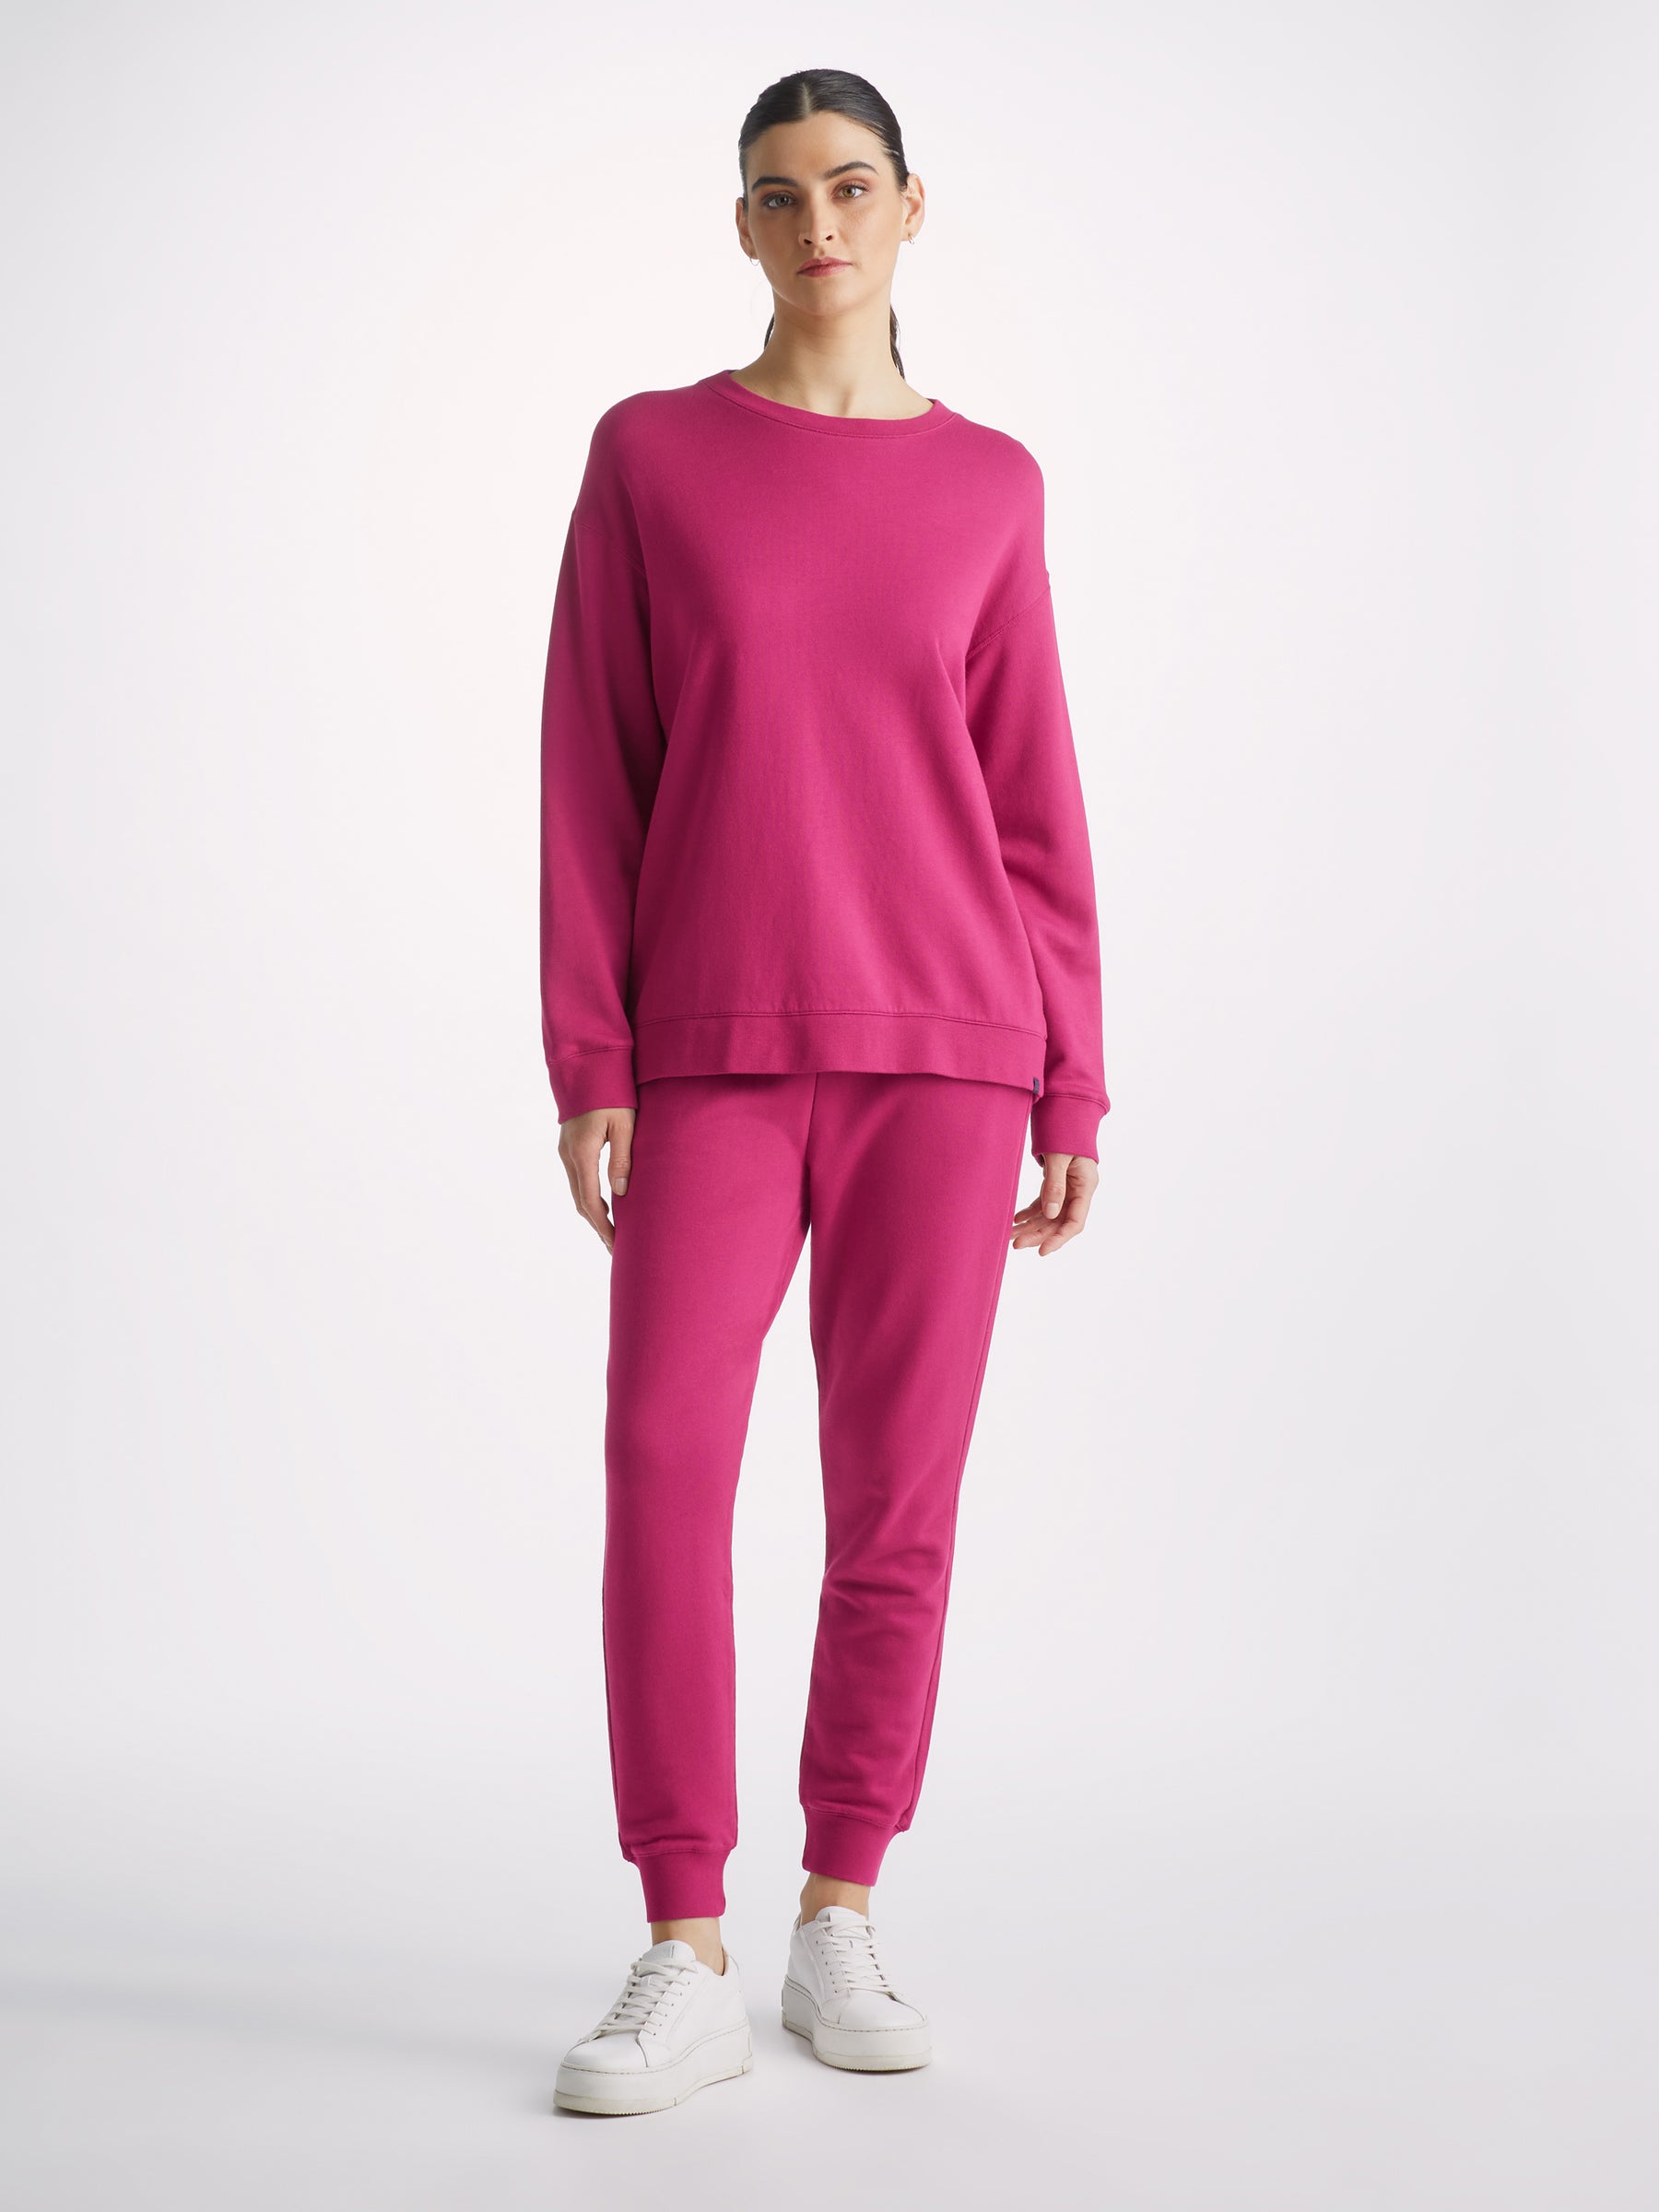 Women's Sweatshirt Quinn Cotton Modal Stretch Berry